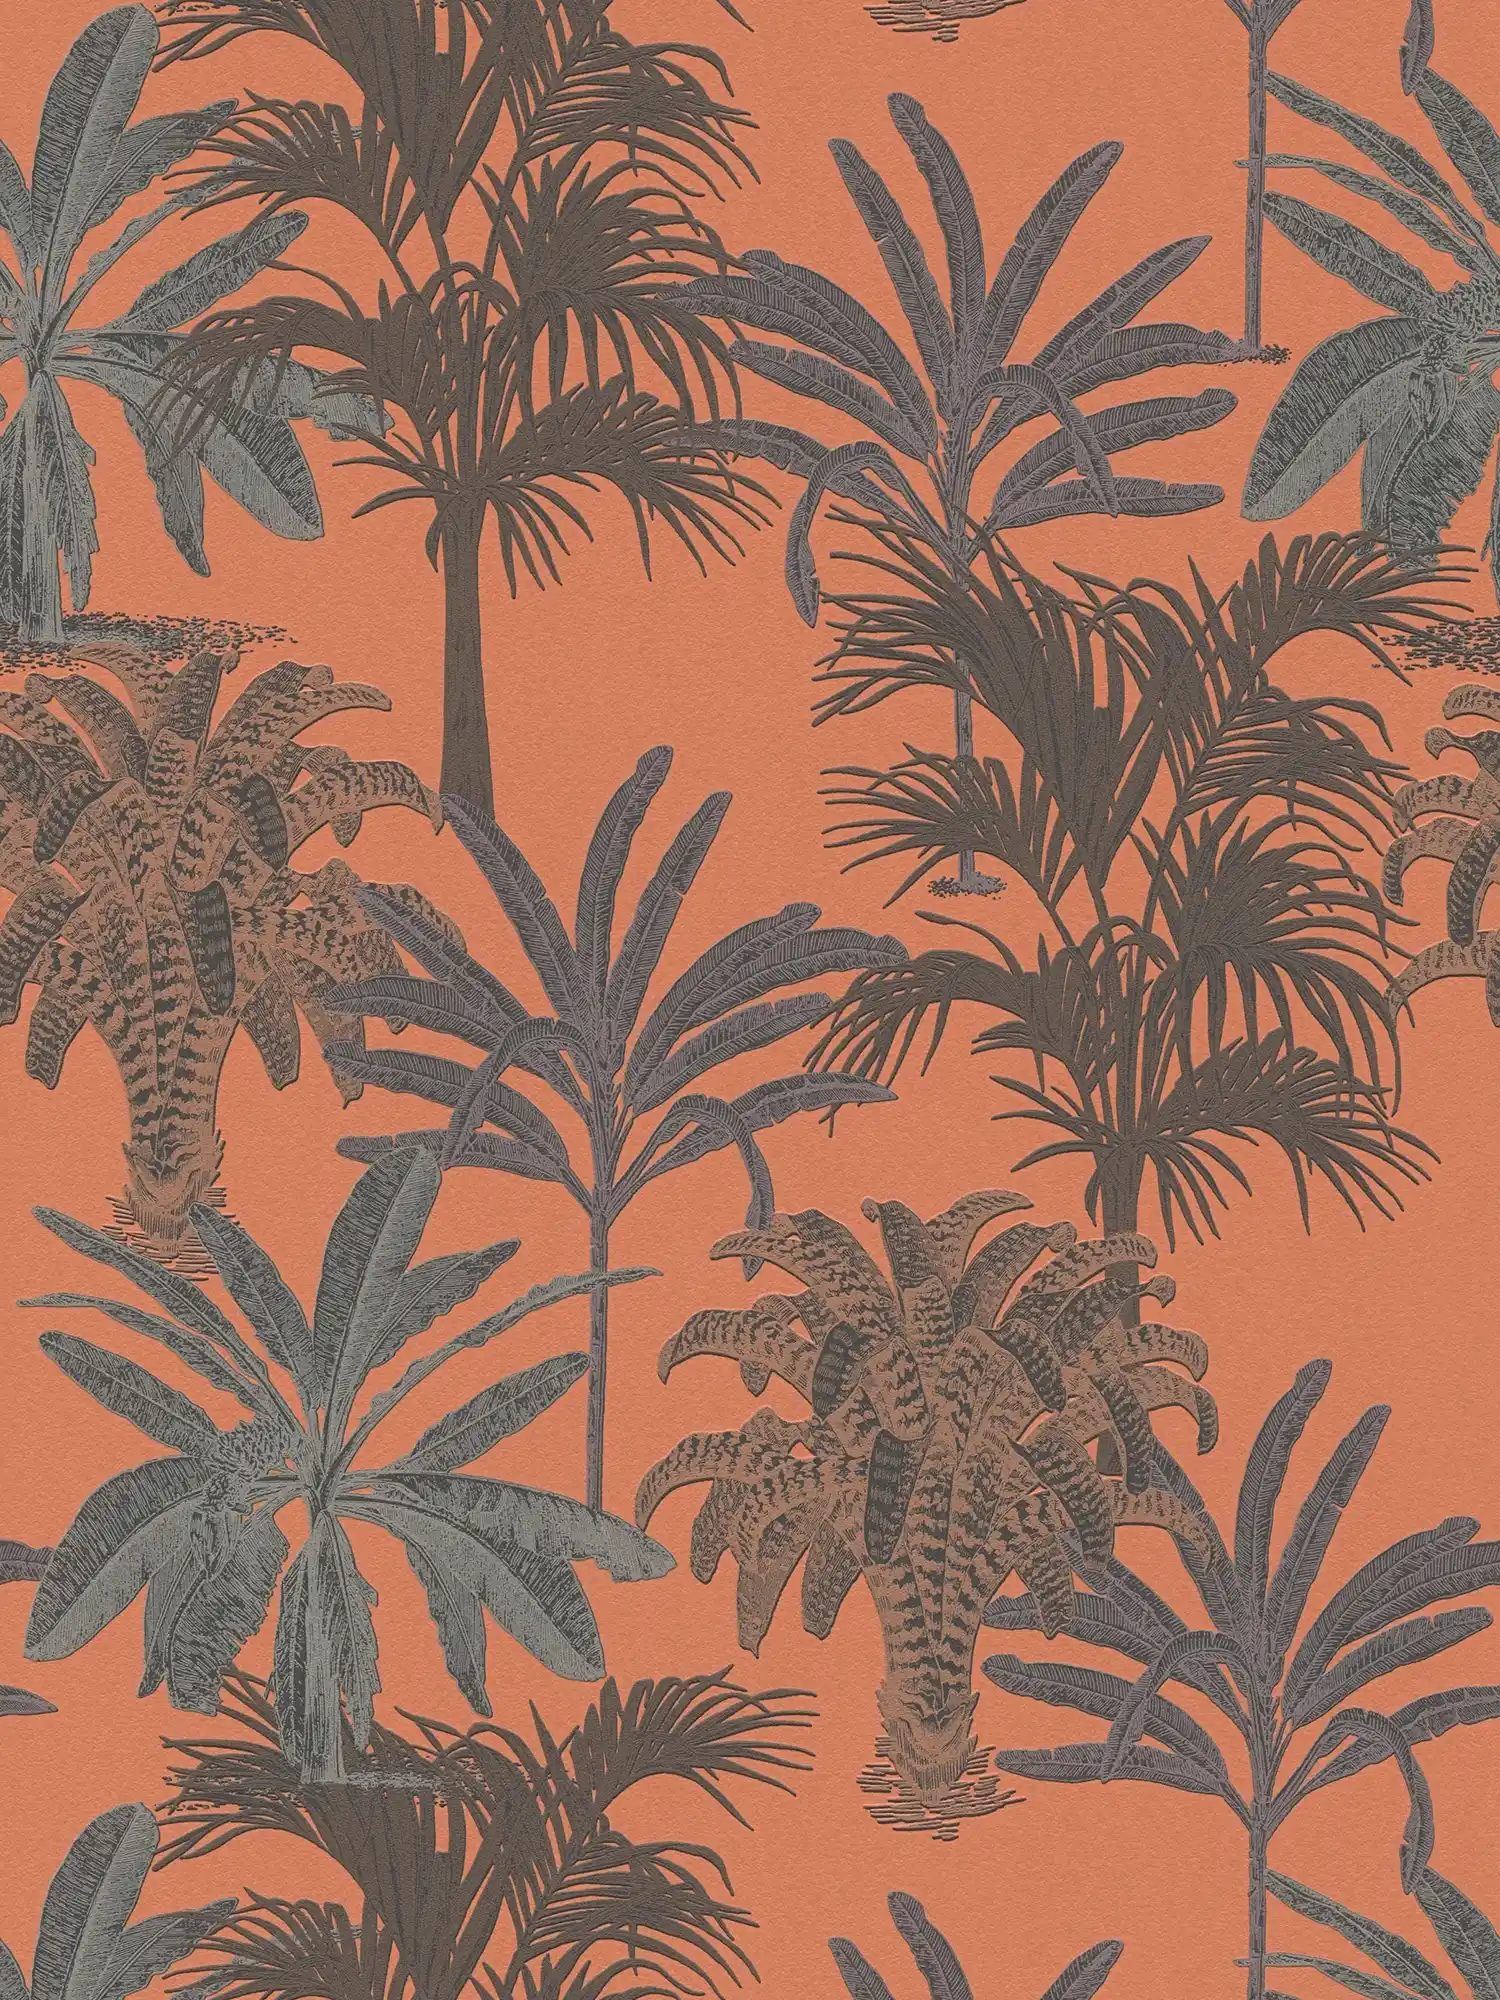 MICHALSKY vliesbehang palmboom patroon koloniale stijl - oranje, bruin
